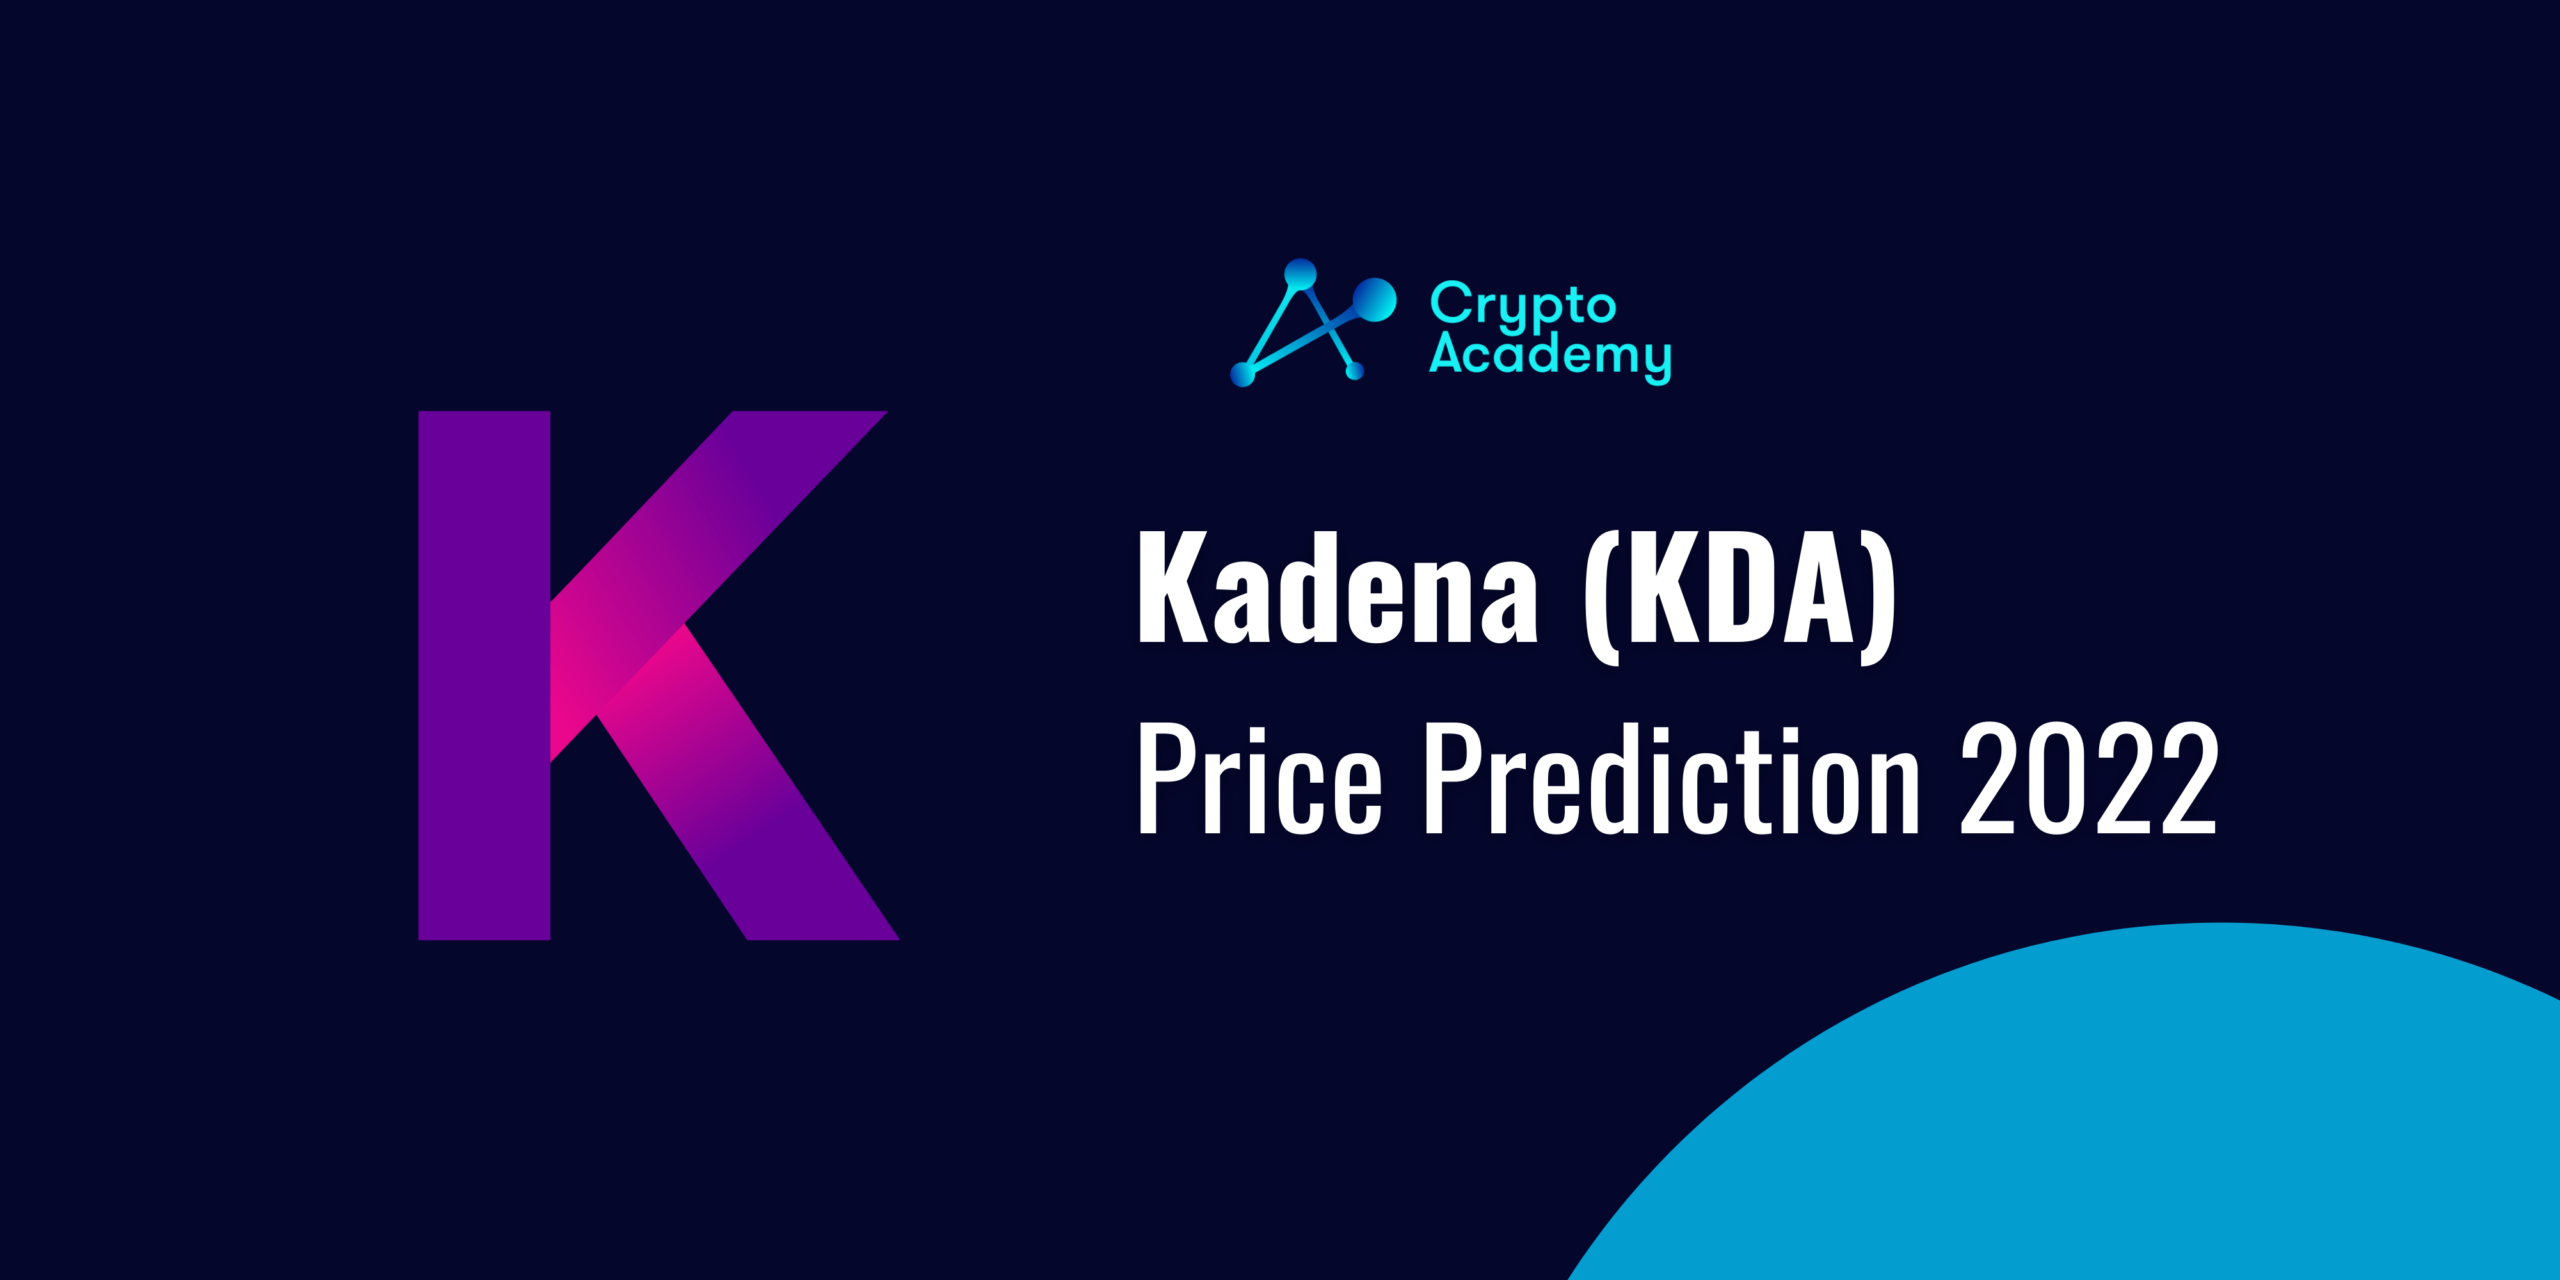 Kadena Price Prediction 2022 and Beyond - Can KDA Eventually Reach $100?